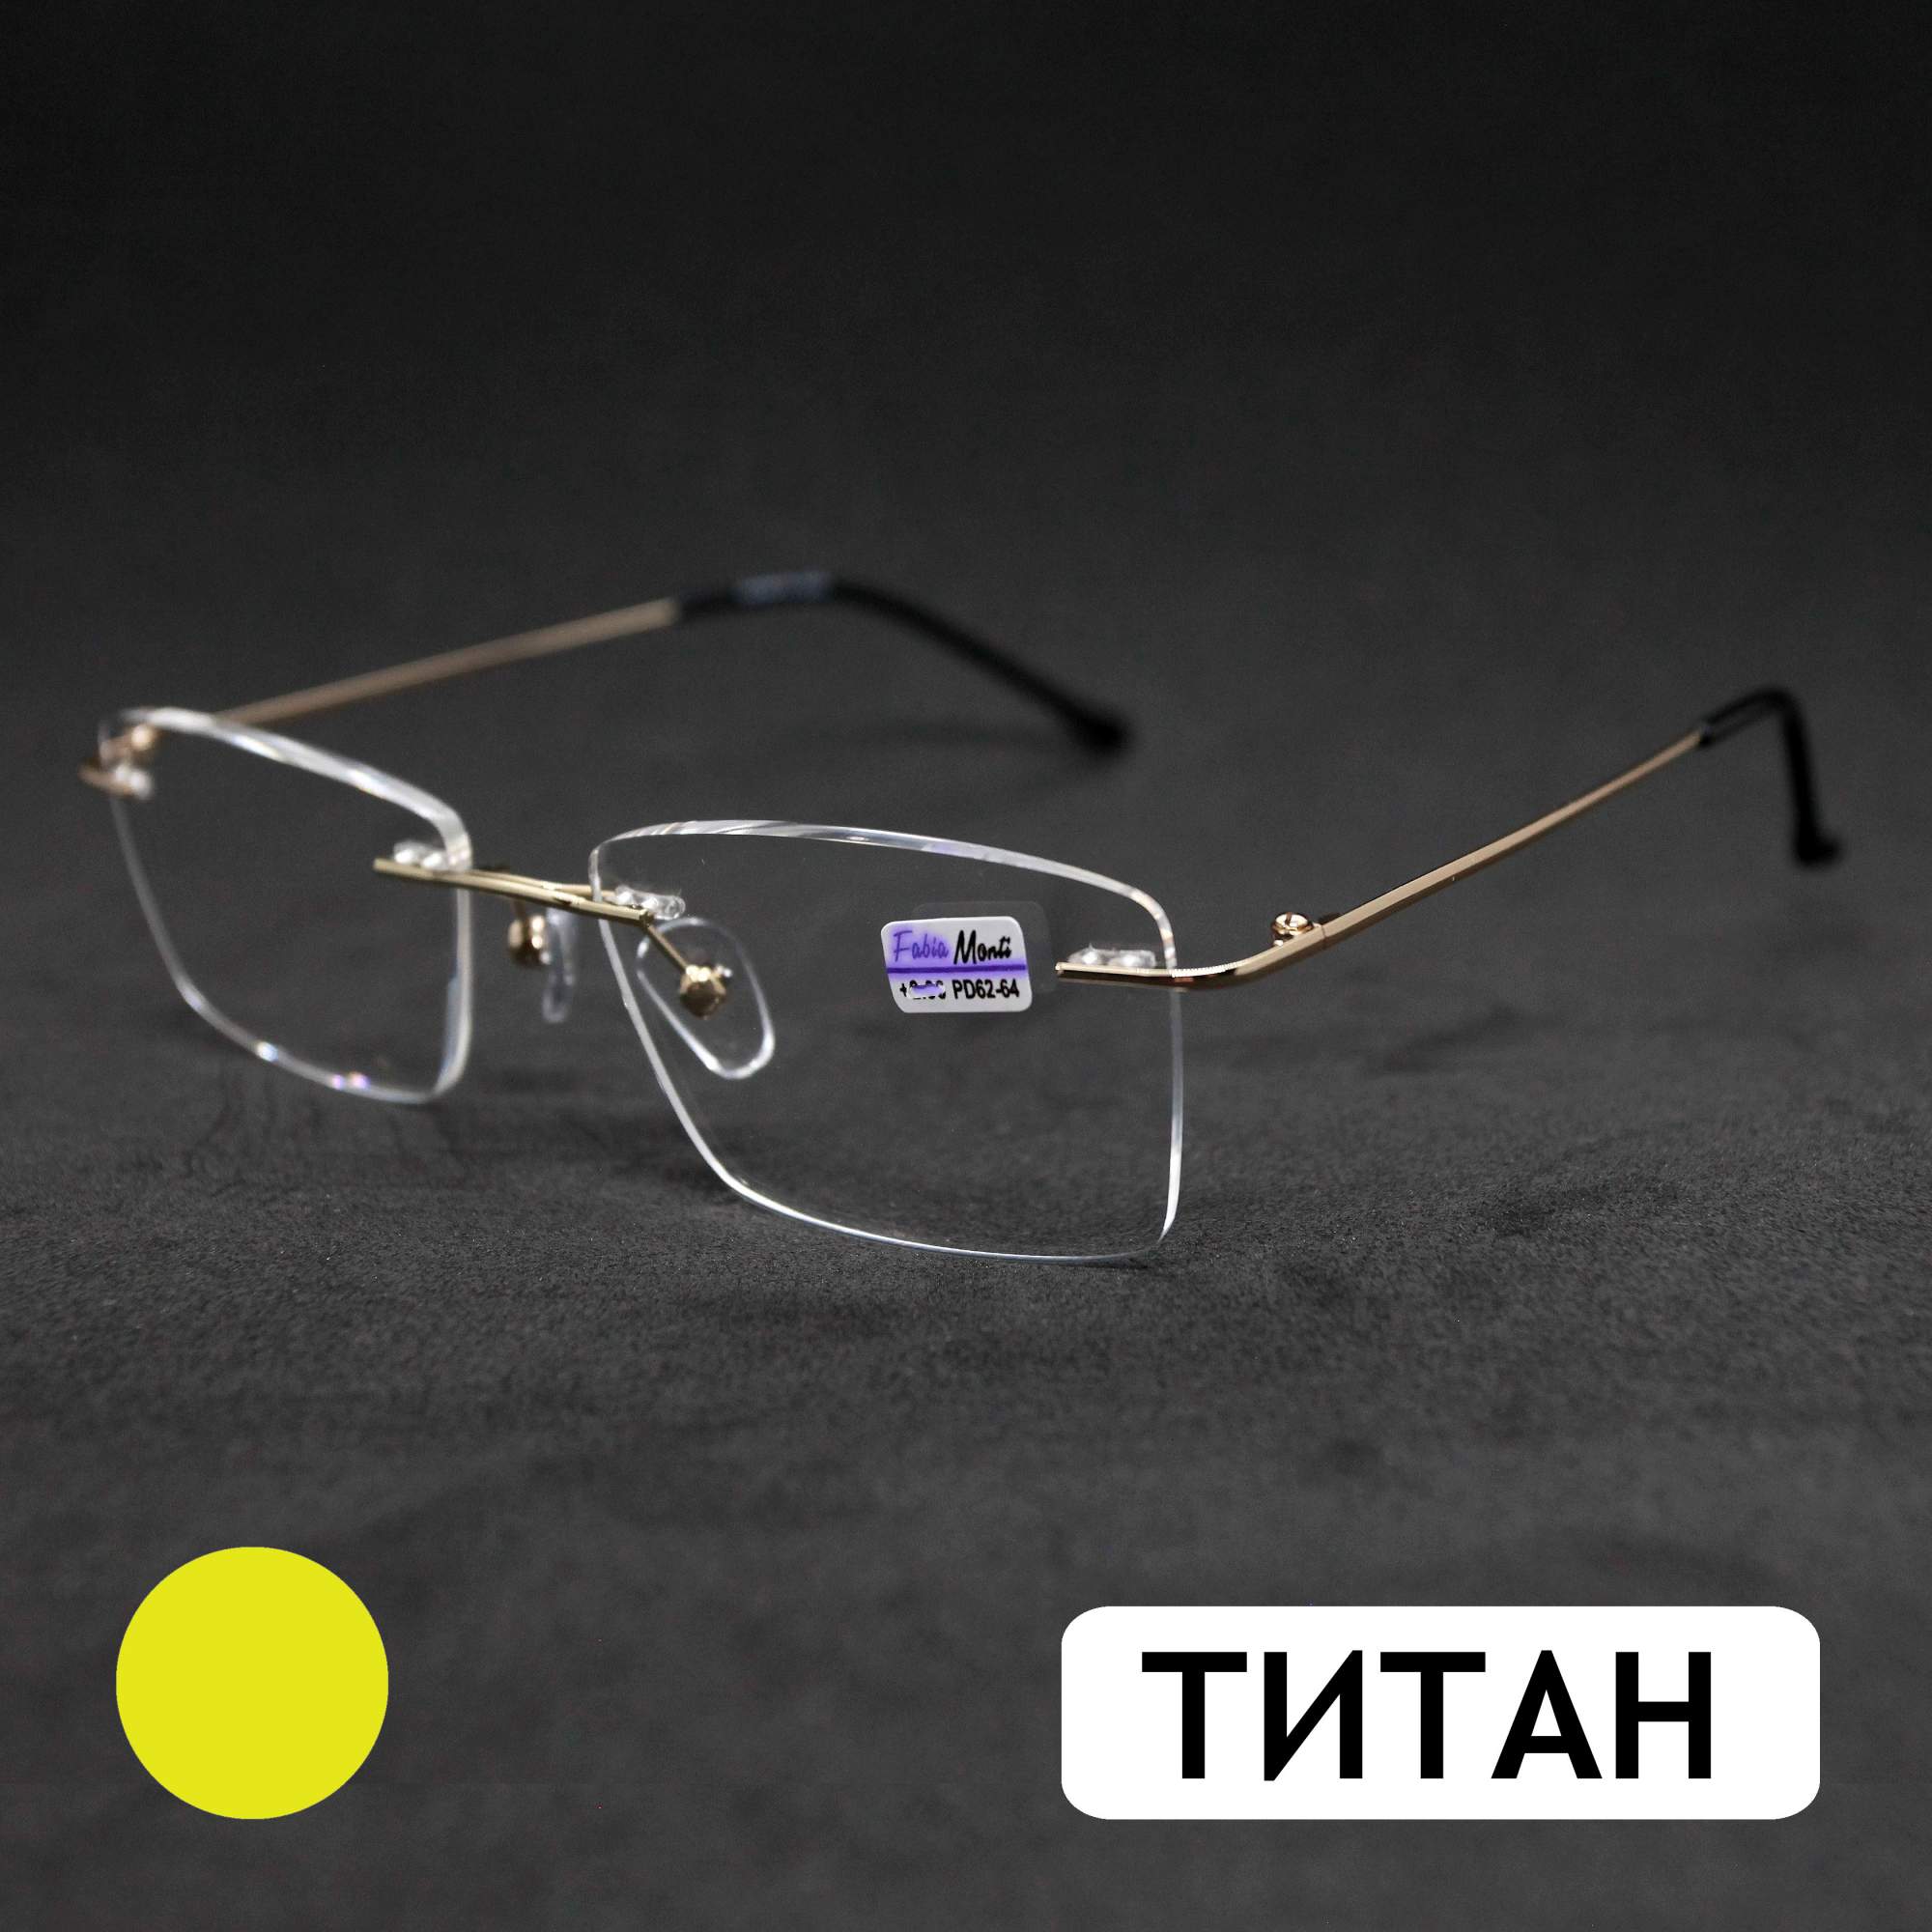 Безободковые очки FM 8959 +2.25, без футляра, оправа титан, золотые, РЦ 62-64